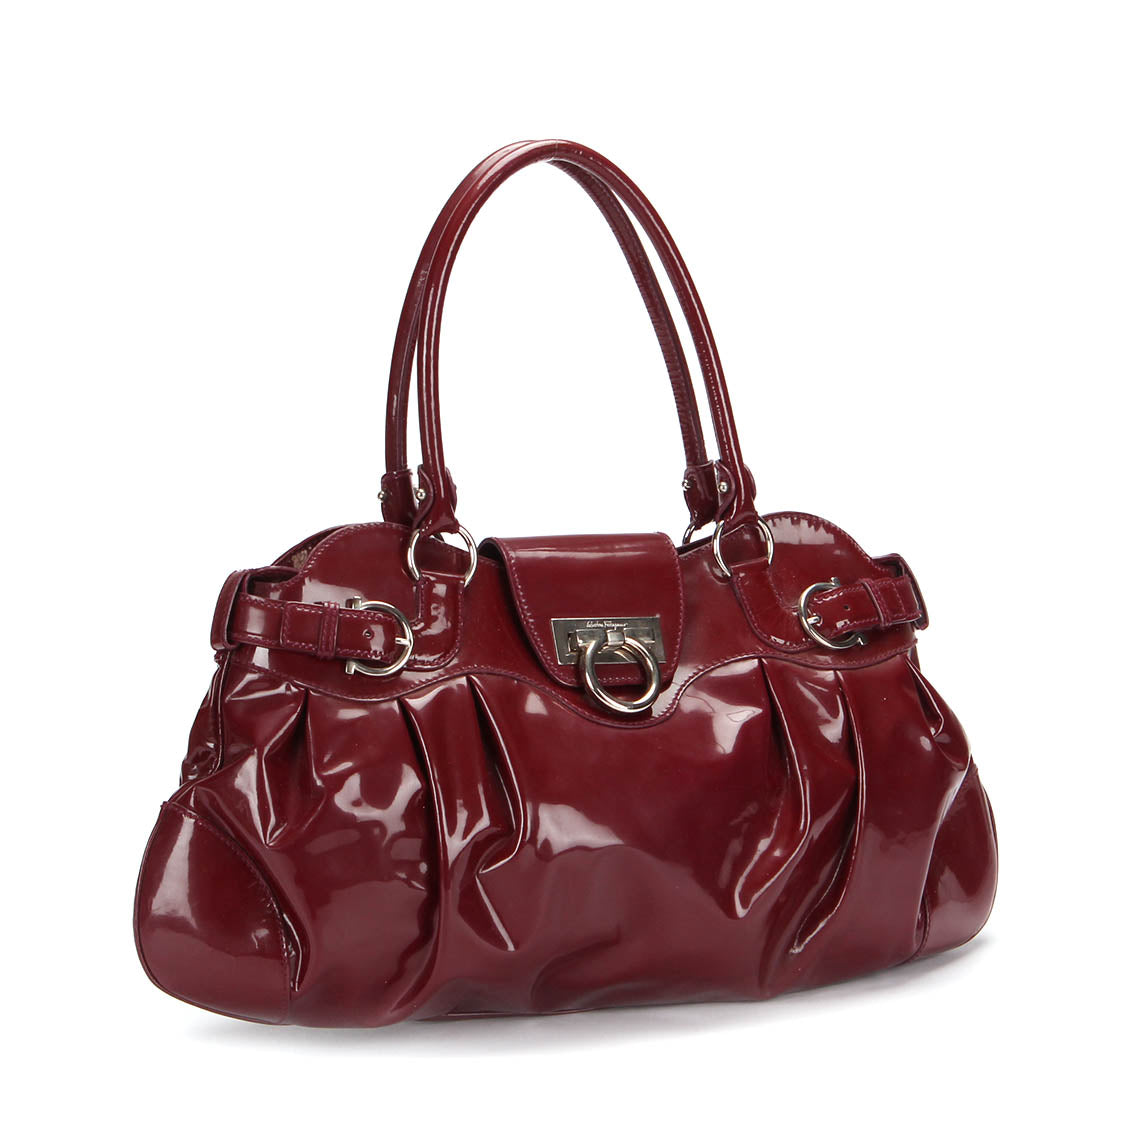 Gancini Patent Leather Handbag